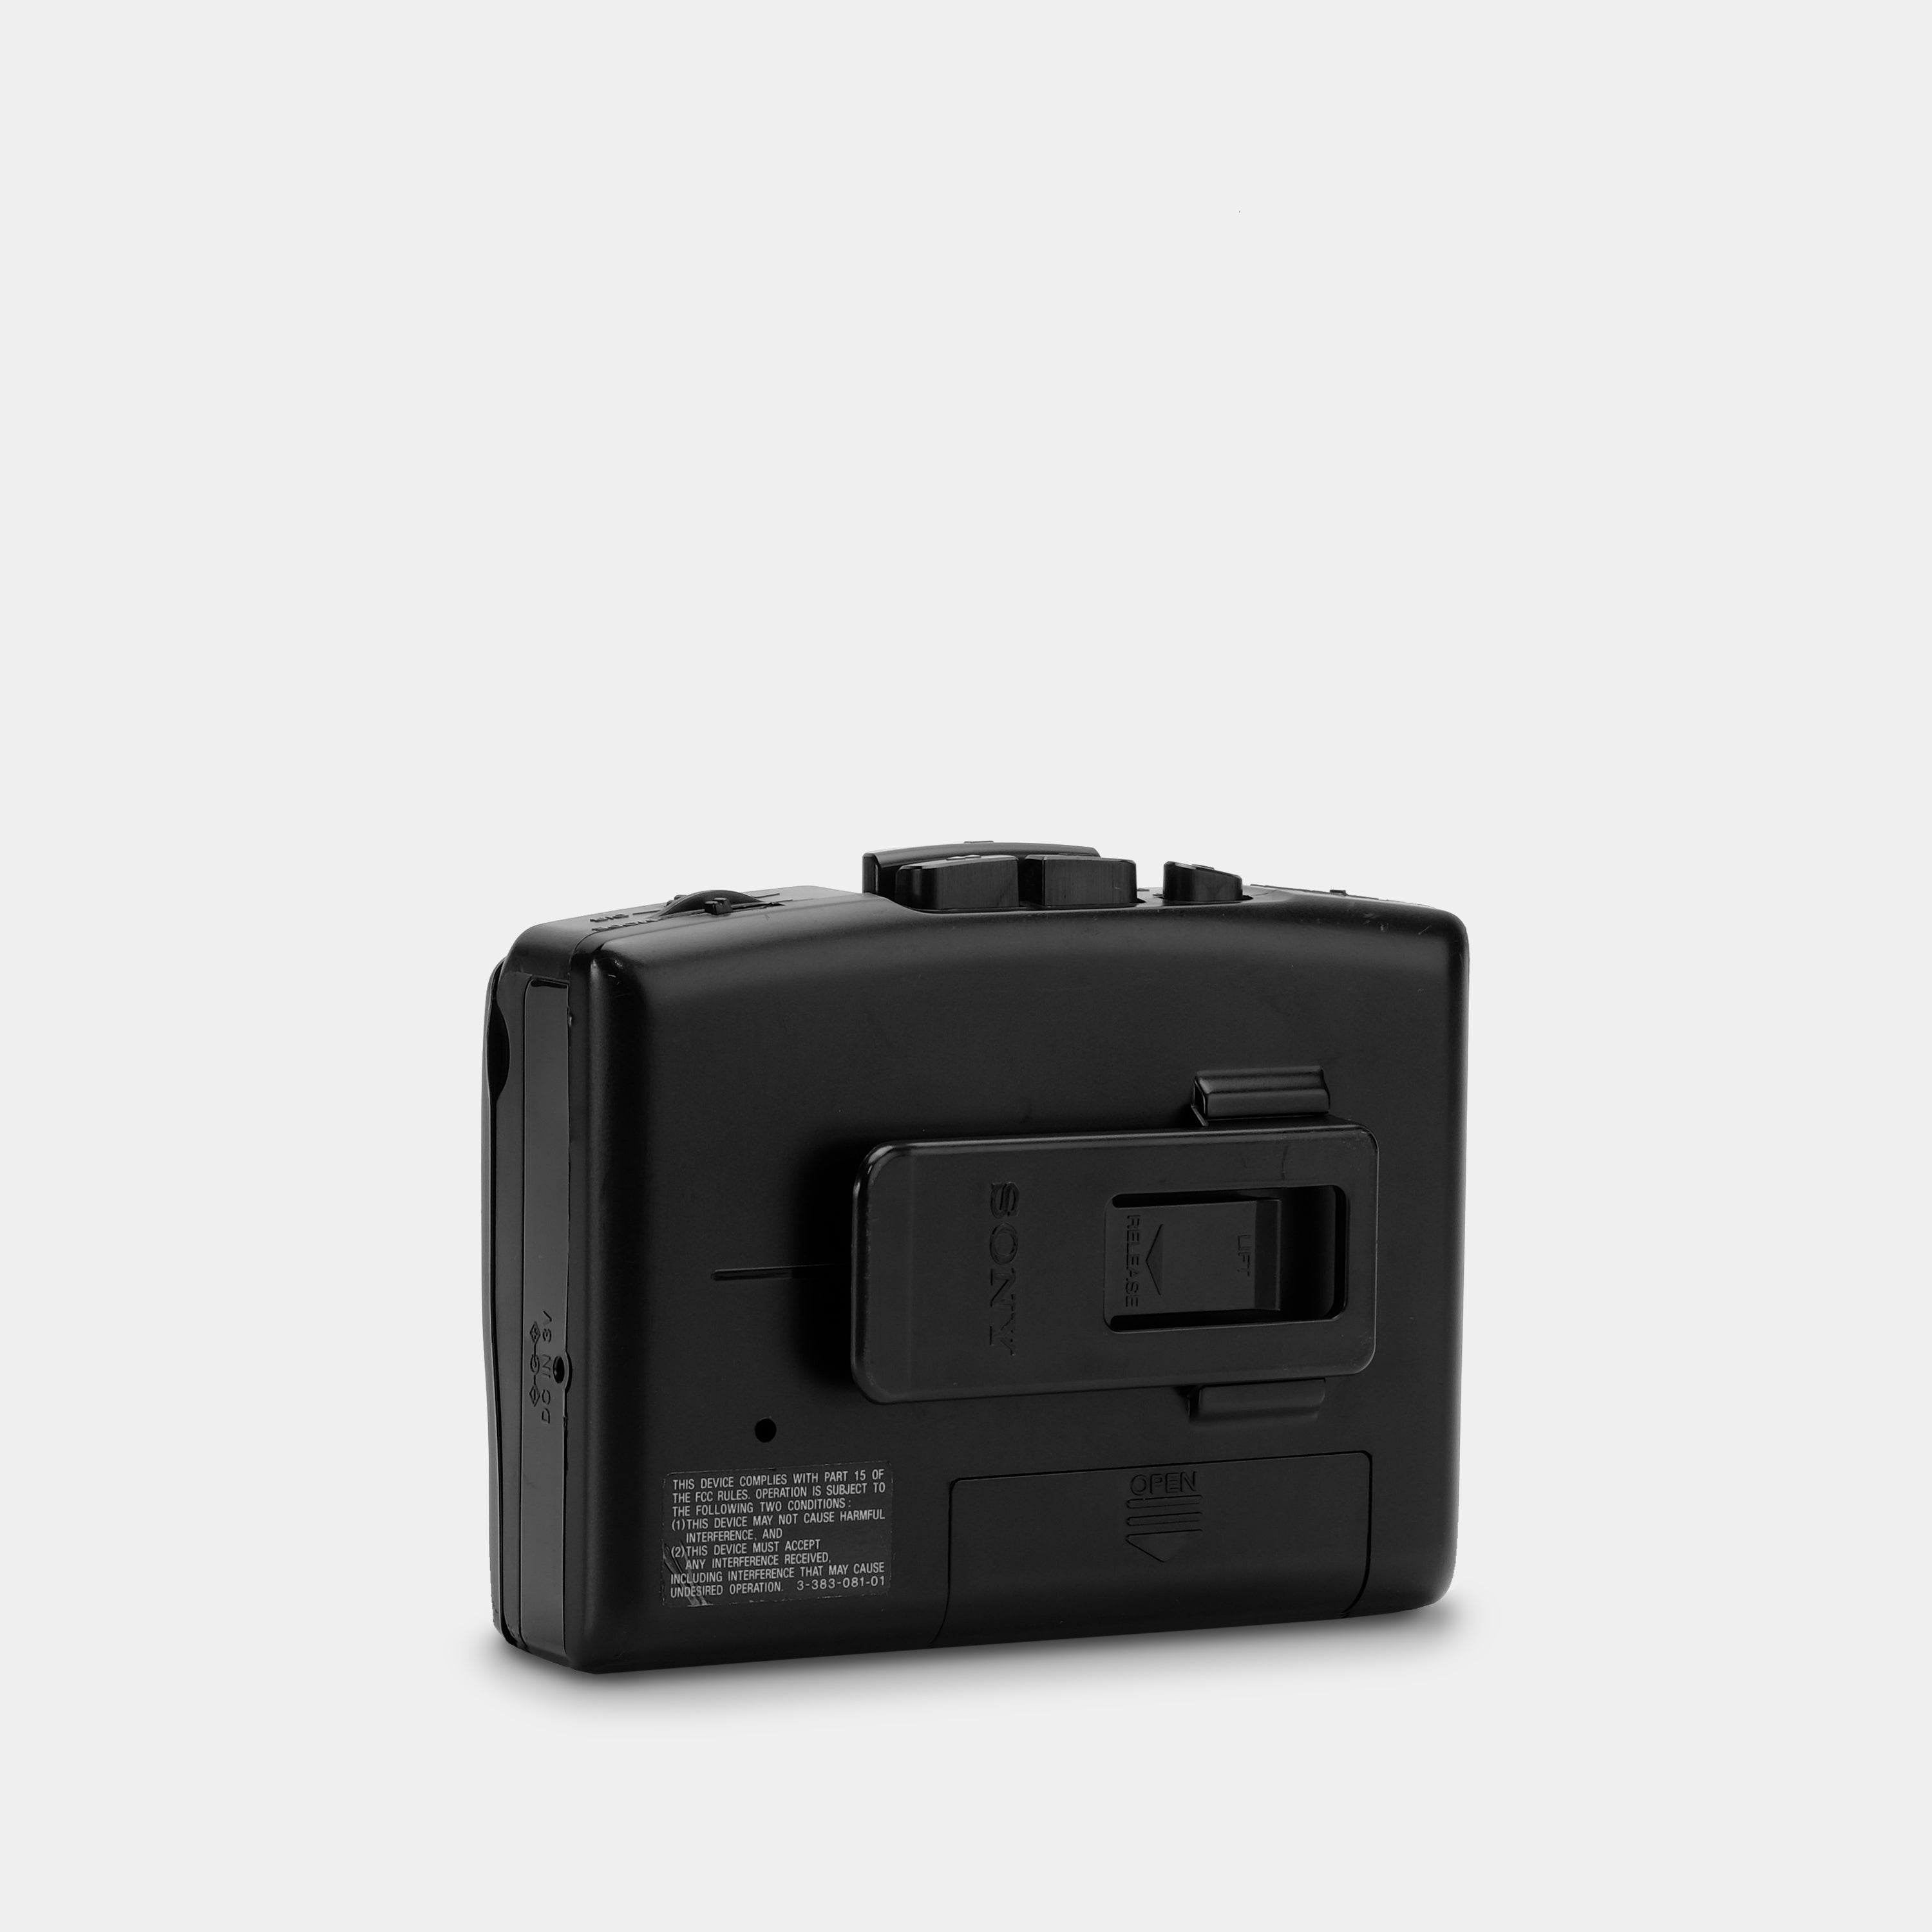 Sony Walkman WM-FX401 Auto Reverse AM/FM Portable Cassette Player